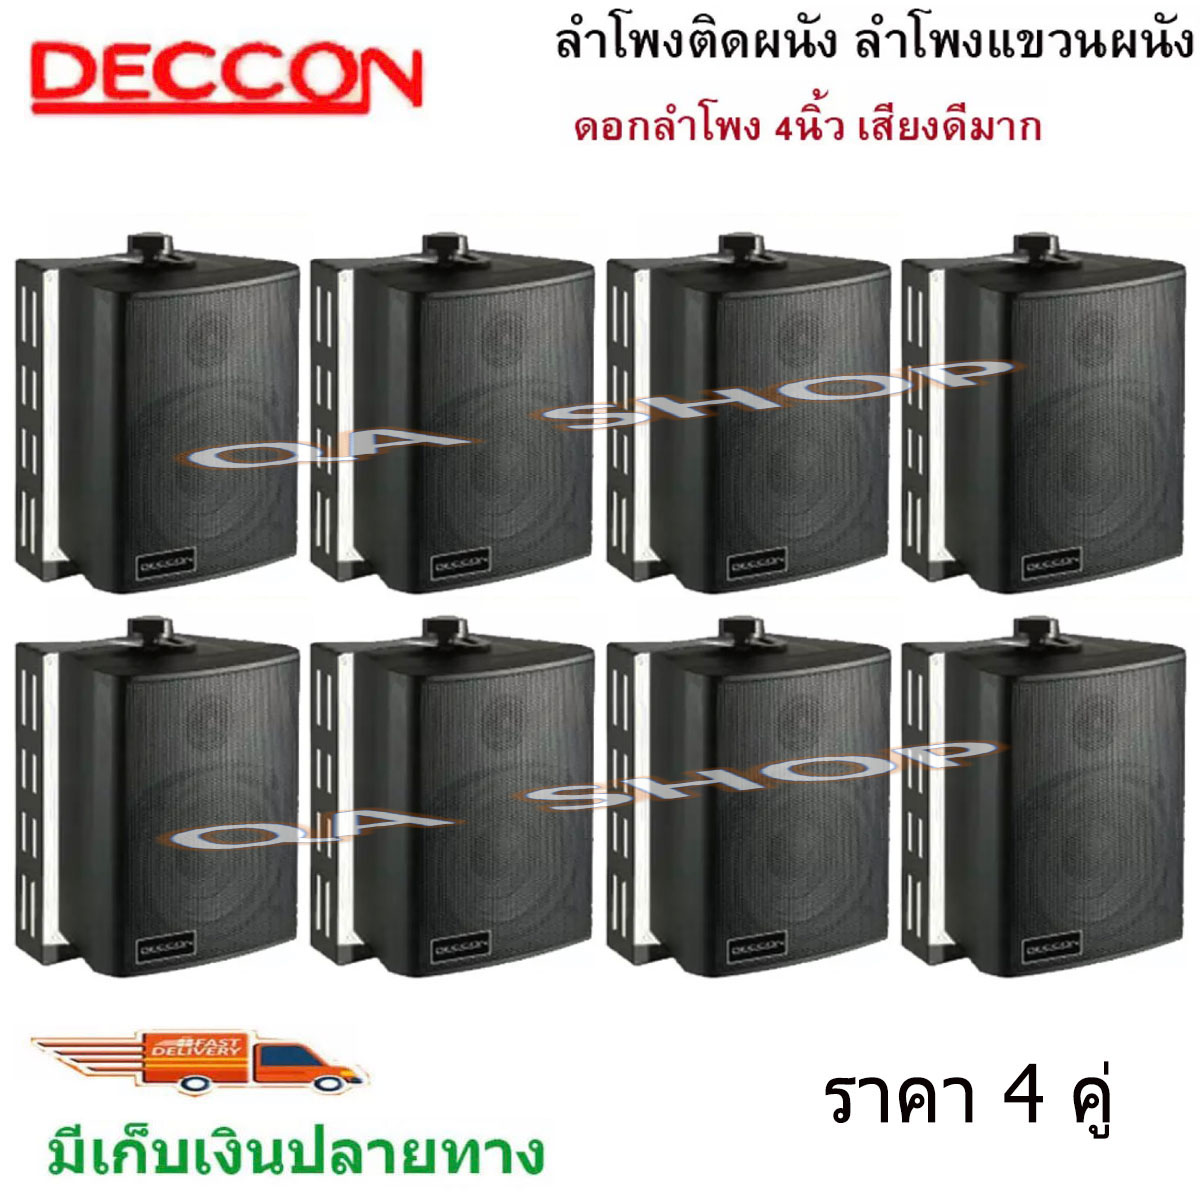 DECCON ตู้ลำโพงพลาสติก ลำโพงติดผนัง ลำโพงแขวน ตู้พร้อมลำโพง 4นิ้ว มีขาแขวน300วัตต์รุ่น ZIN-4 (สีดำ)